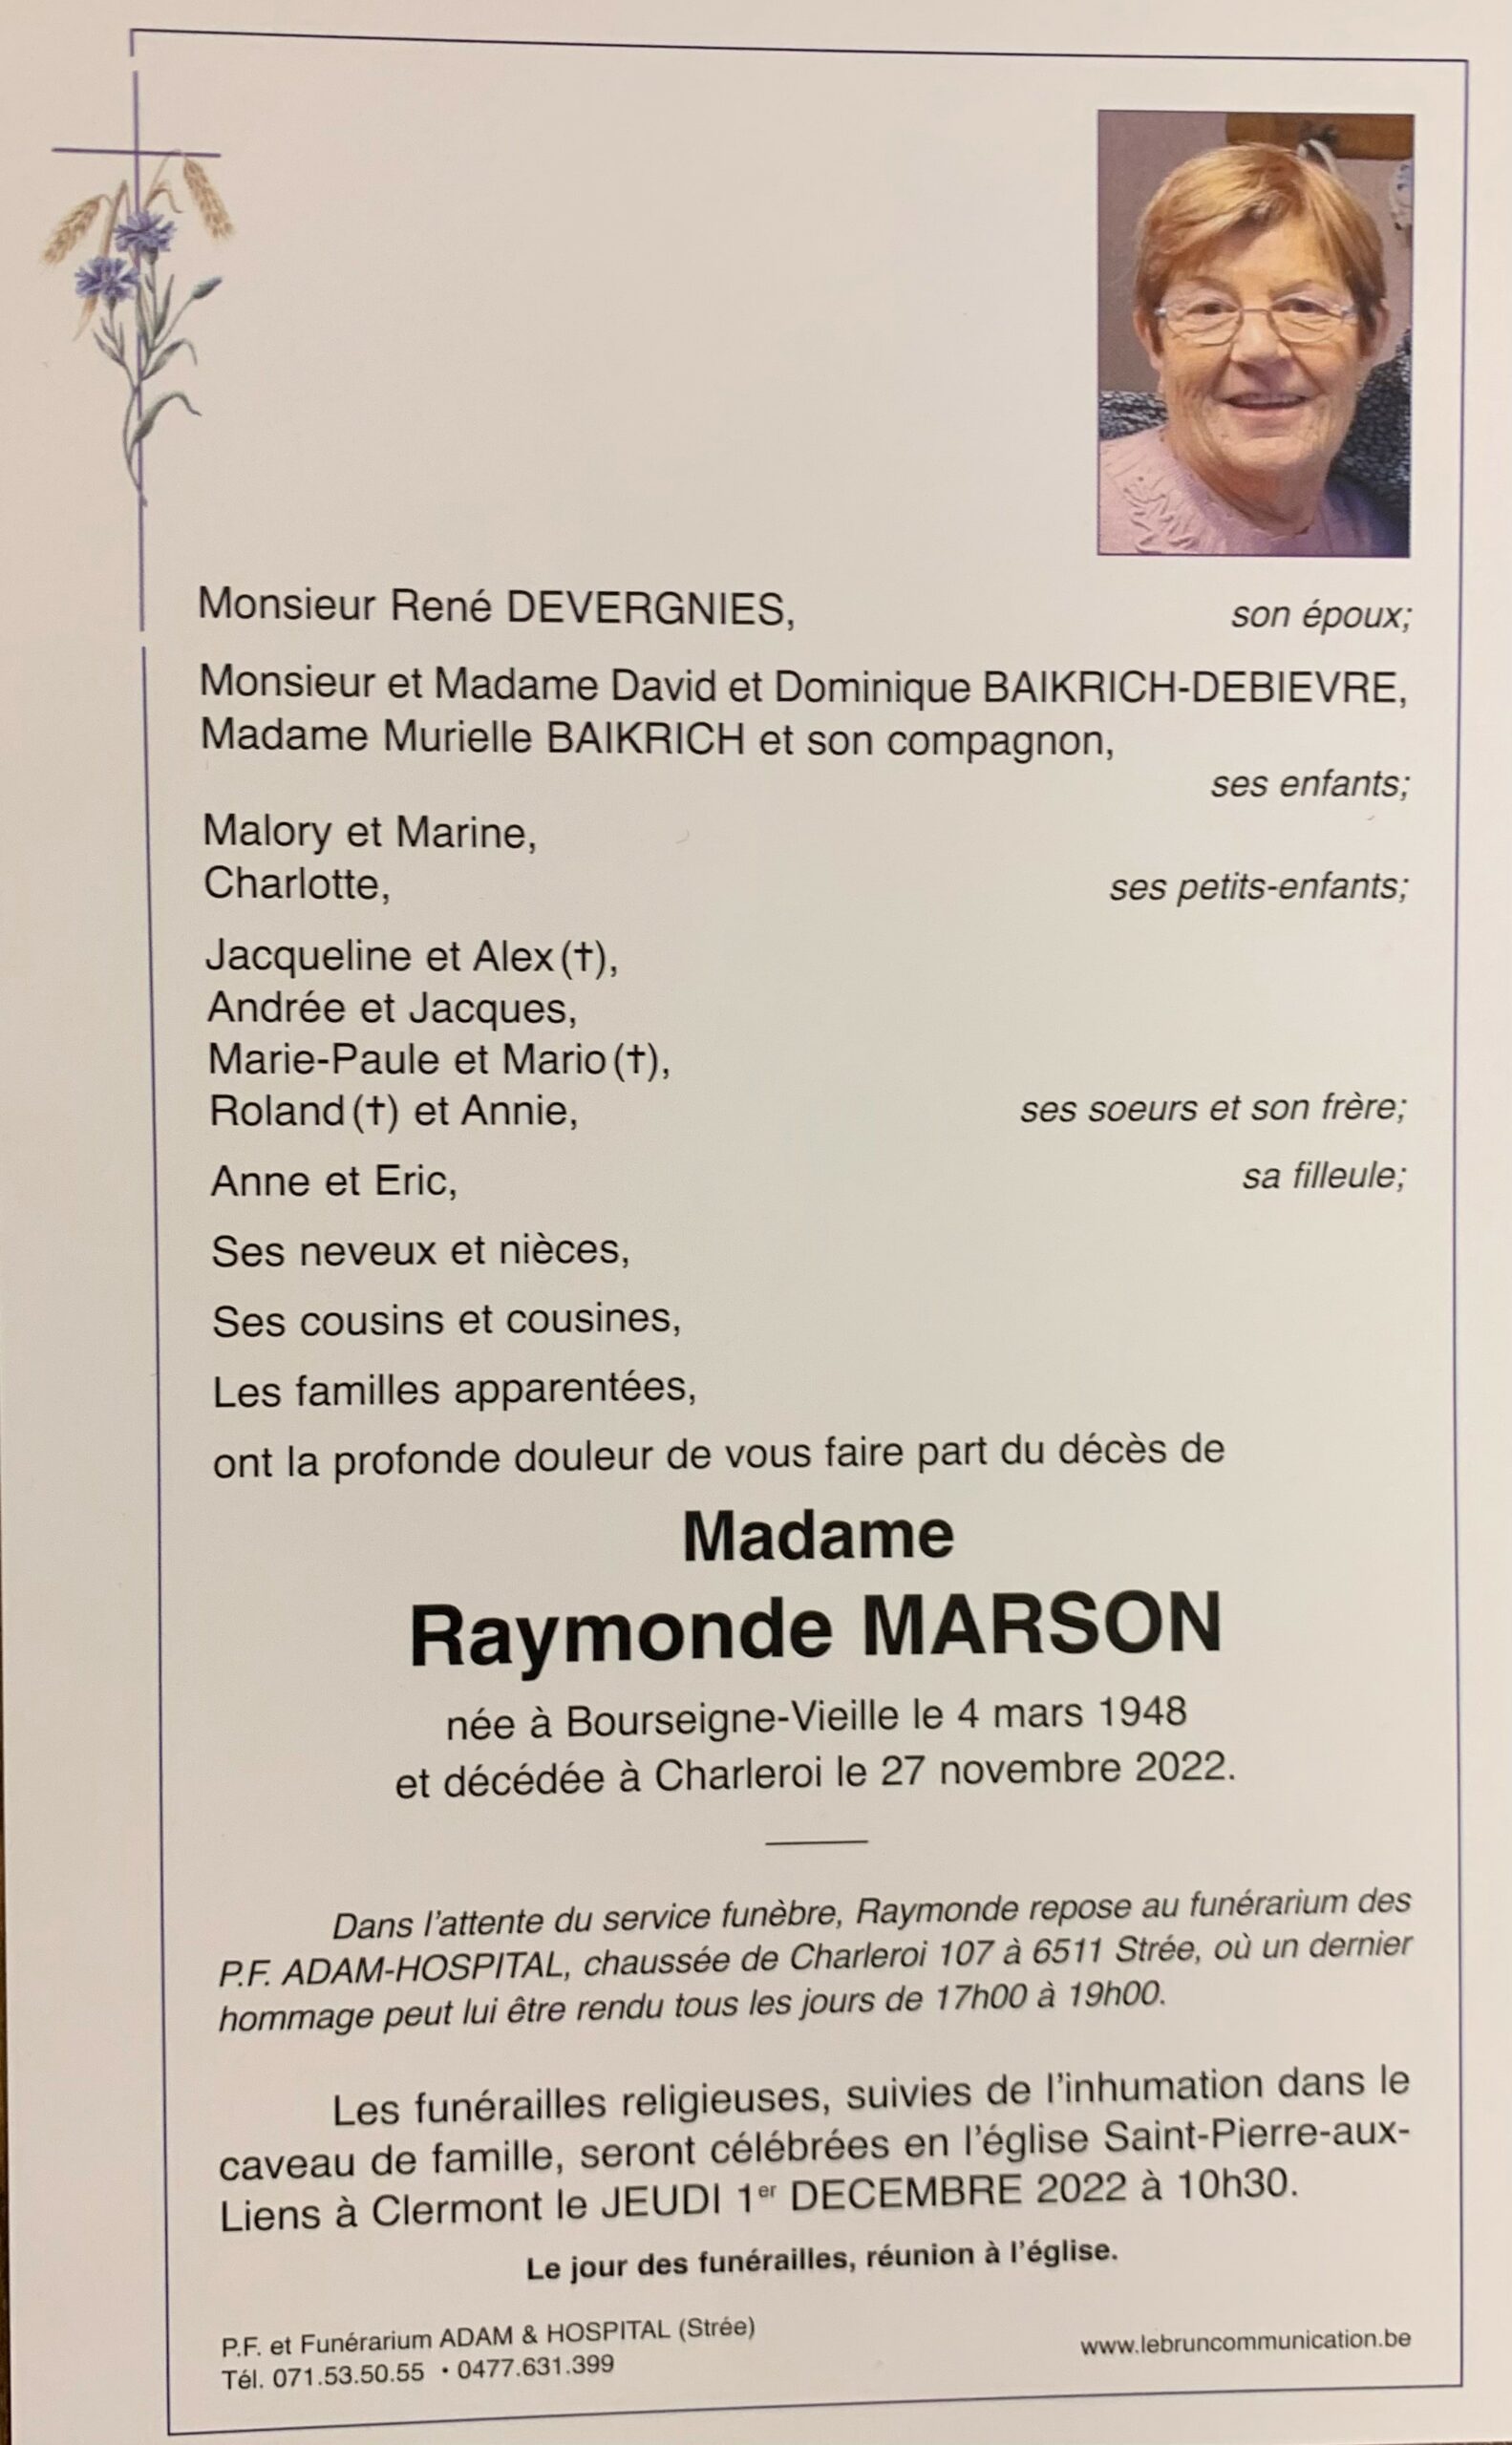 Madame Raymonde MARSON scaled | Funérailles Adam Hospital